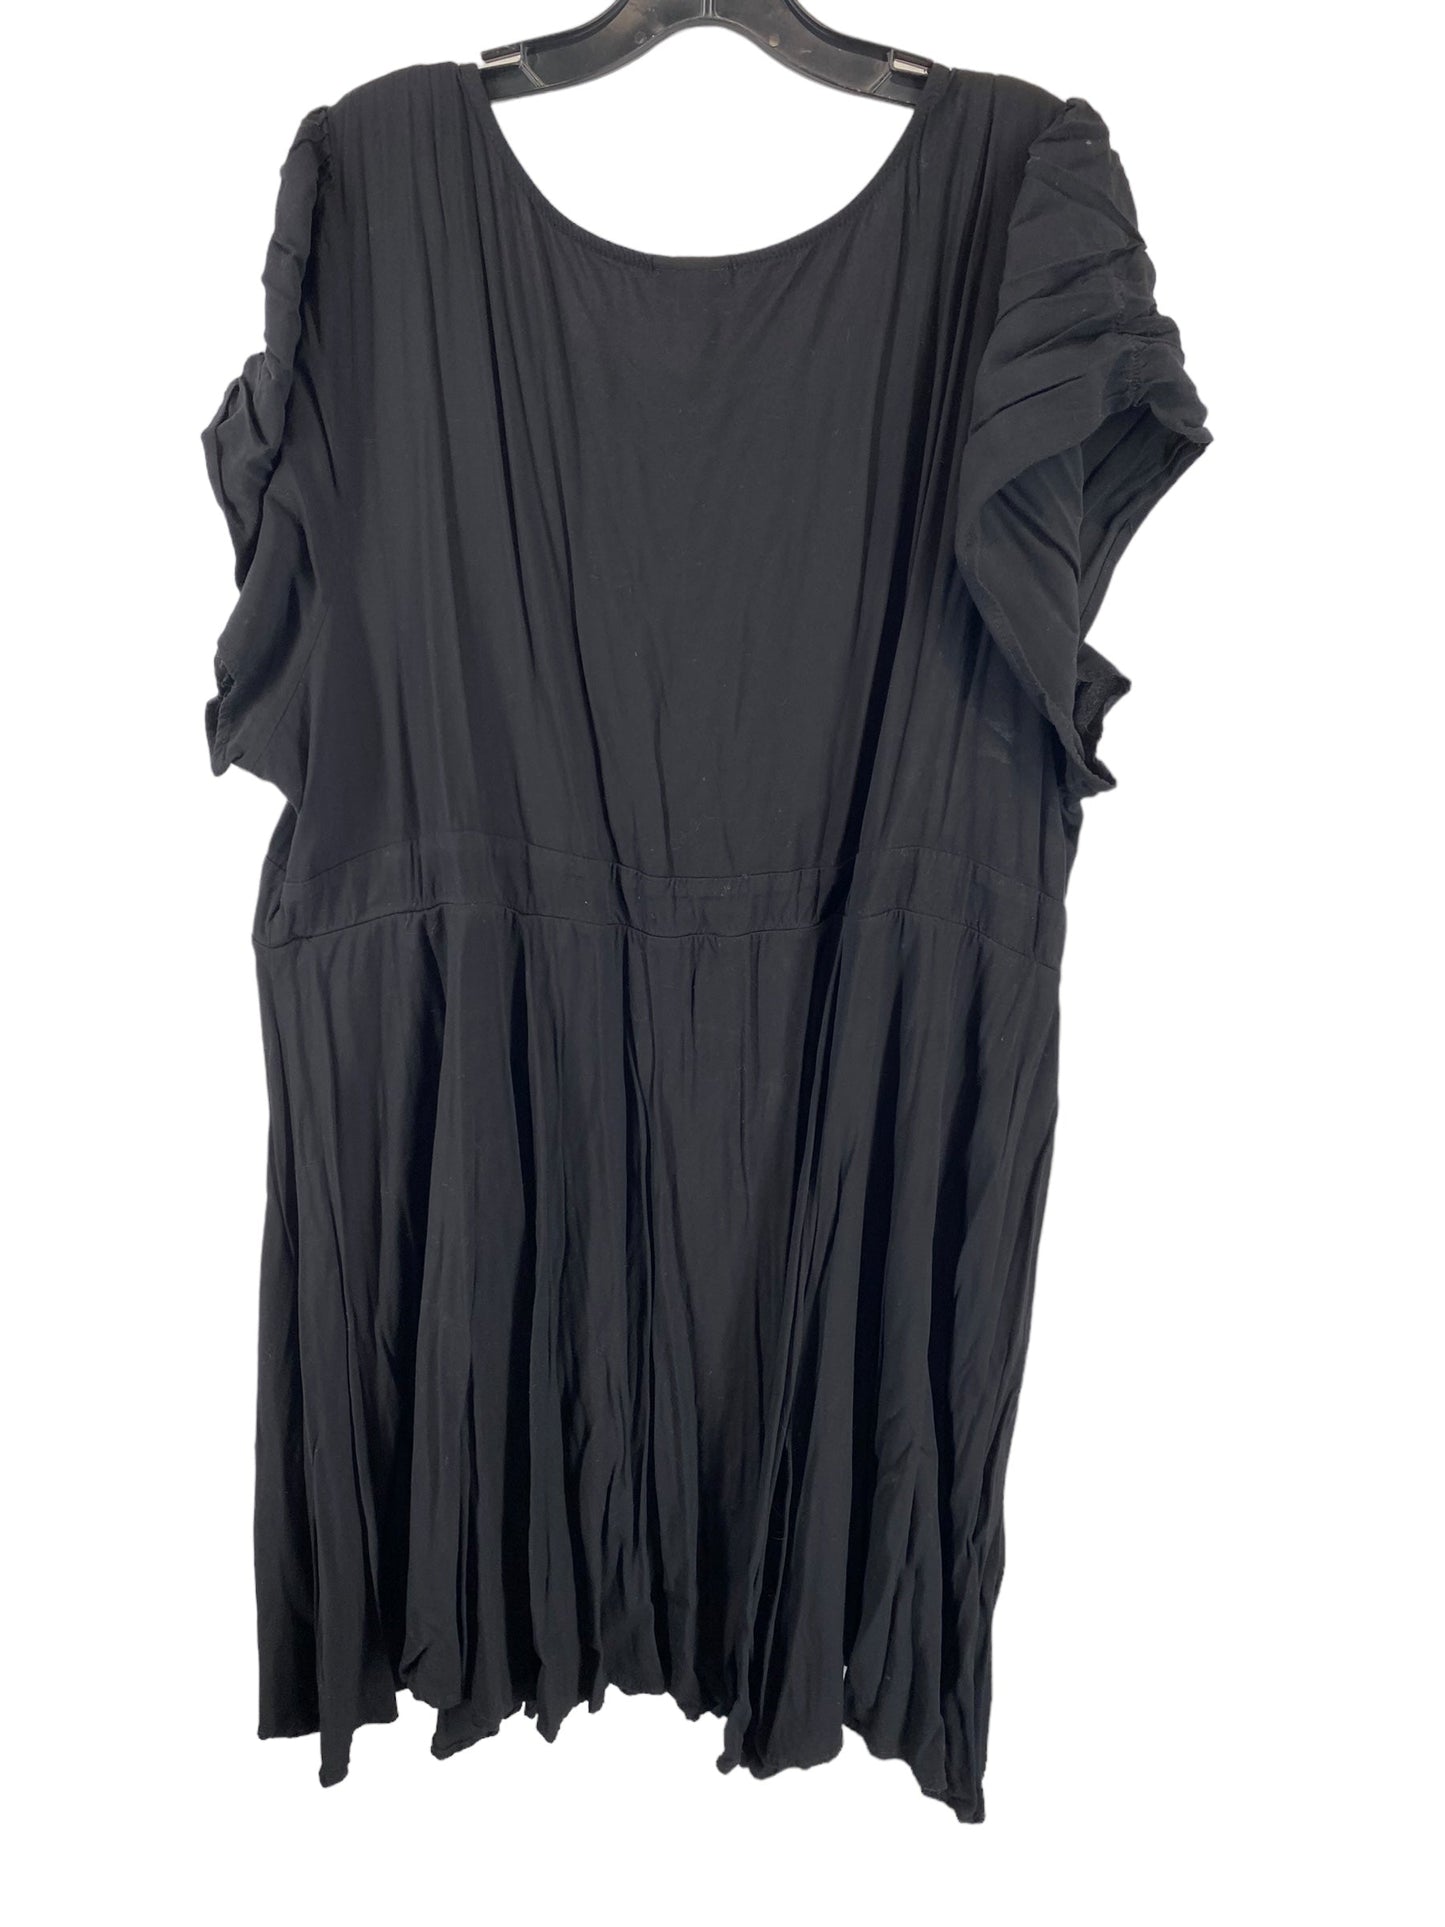 Black Dress Casual Short Torrid, Size 5